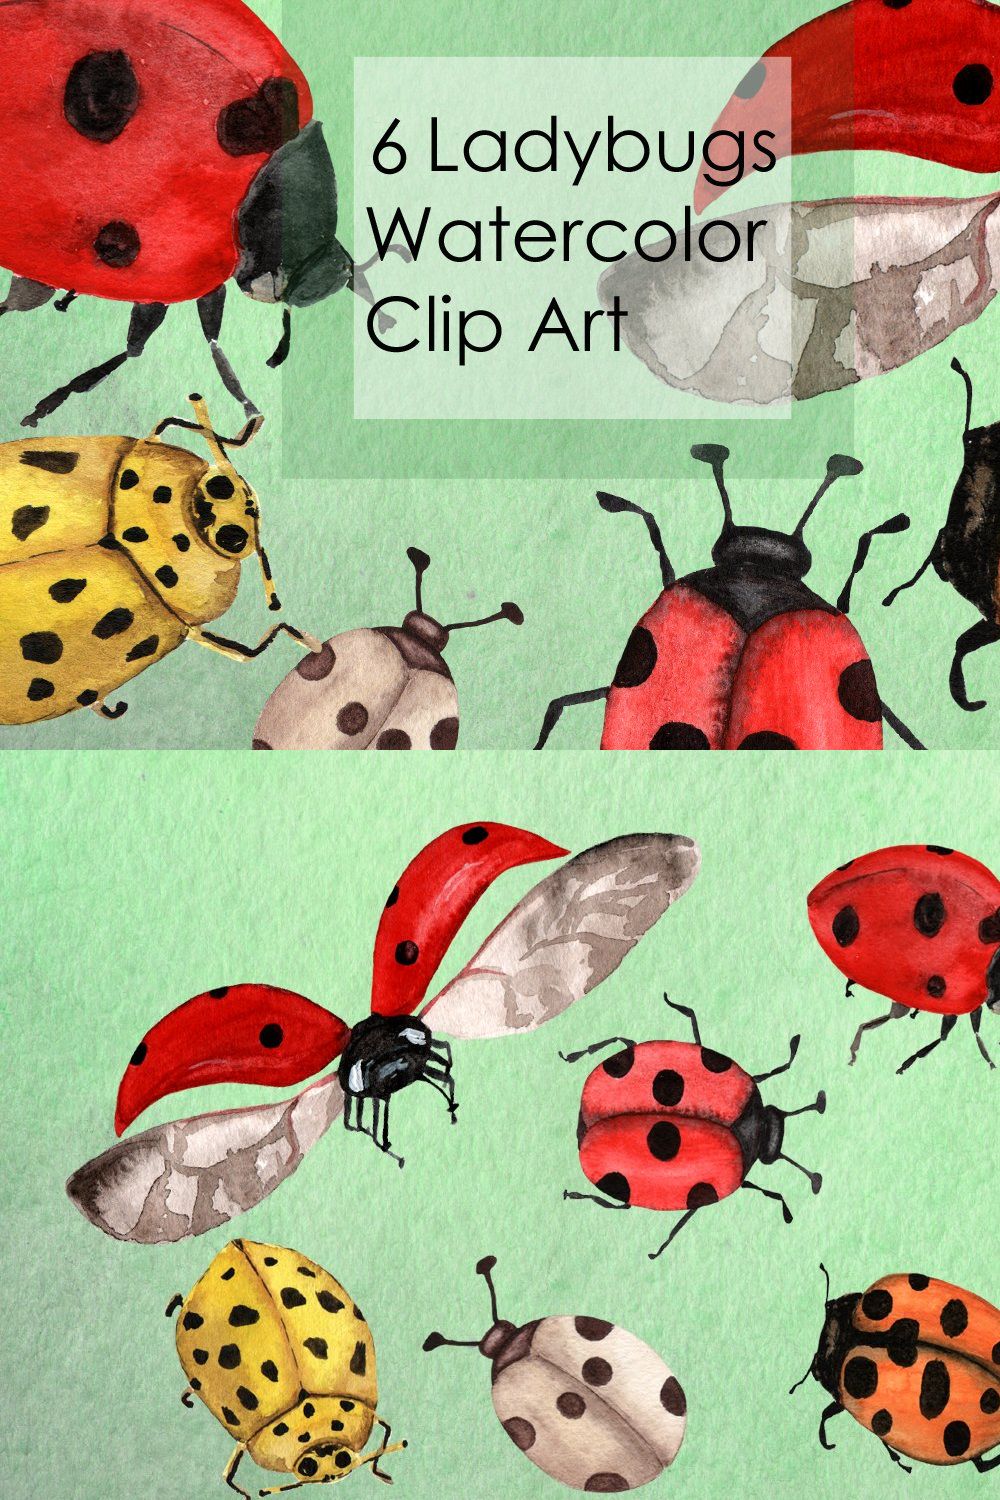 Watercolor Ladybugs Clip Art pinterest preview image.